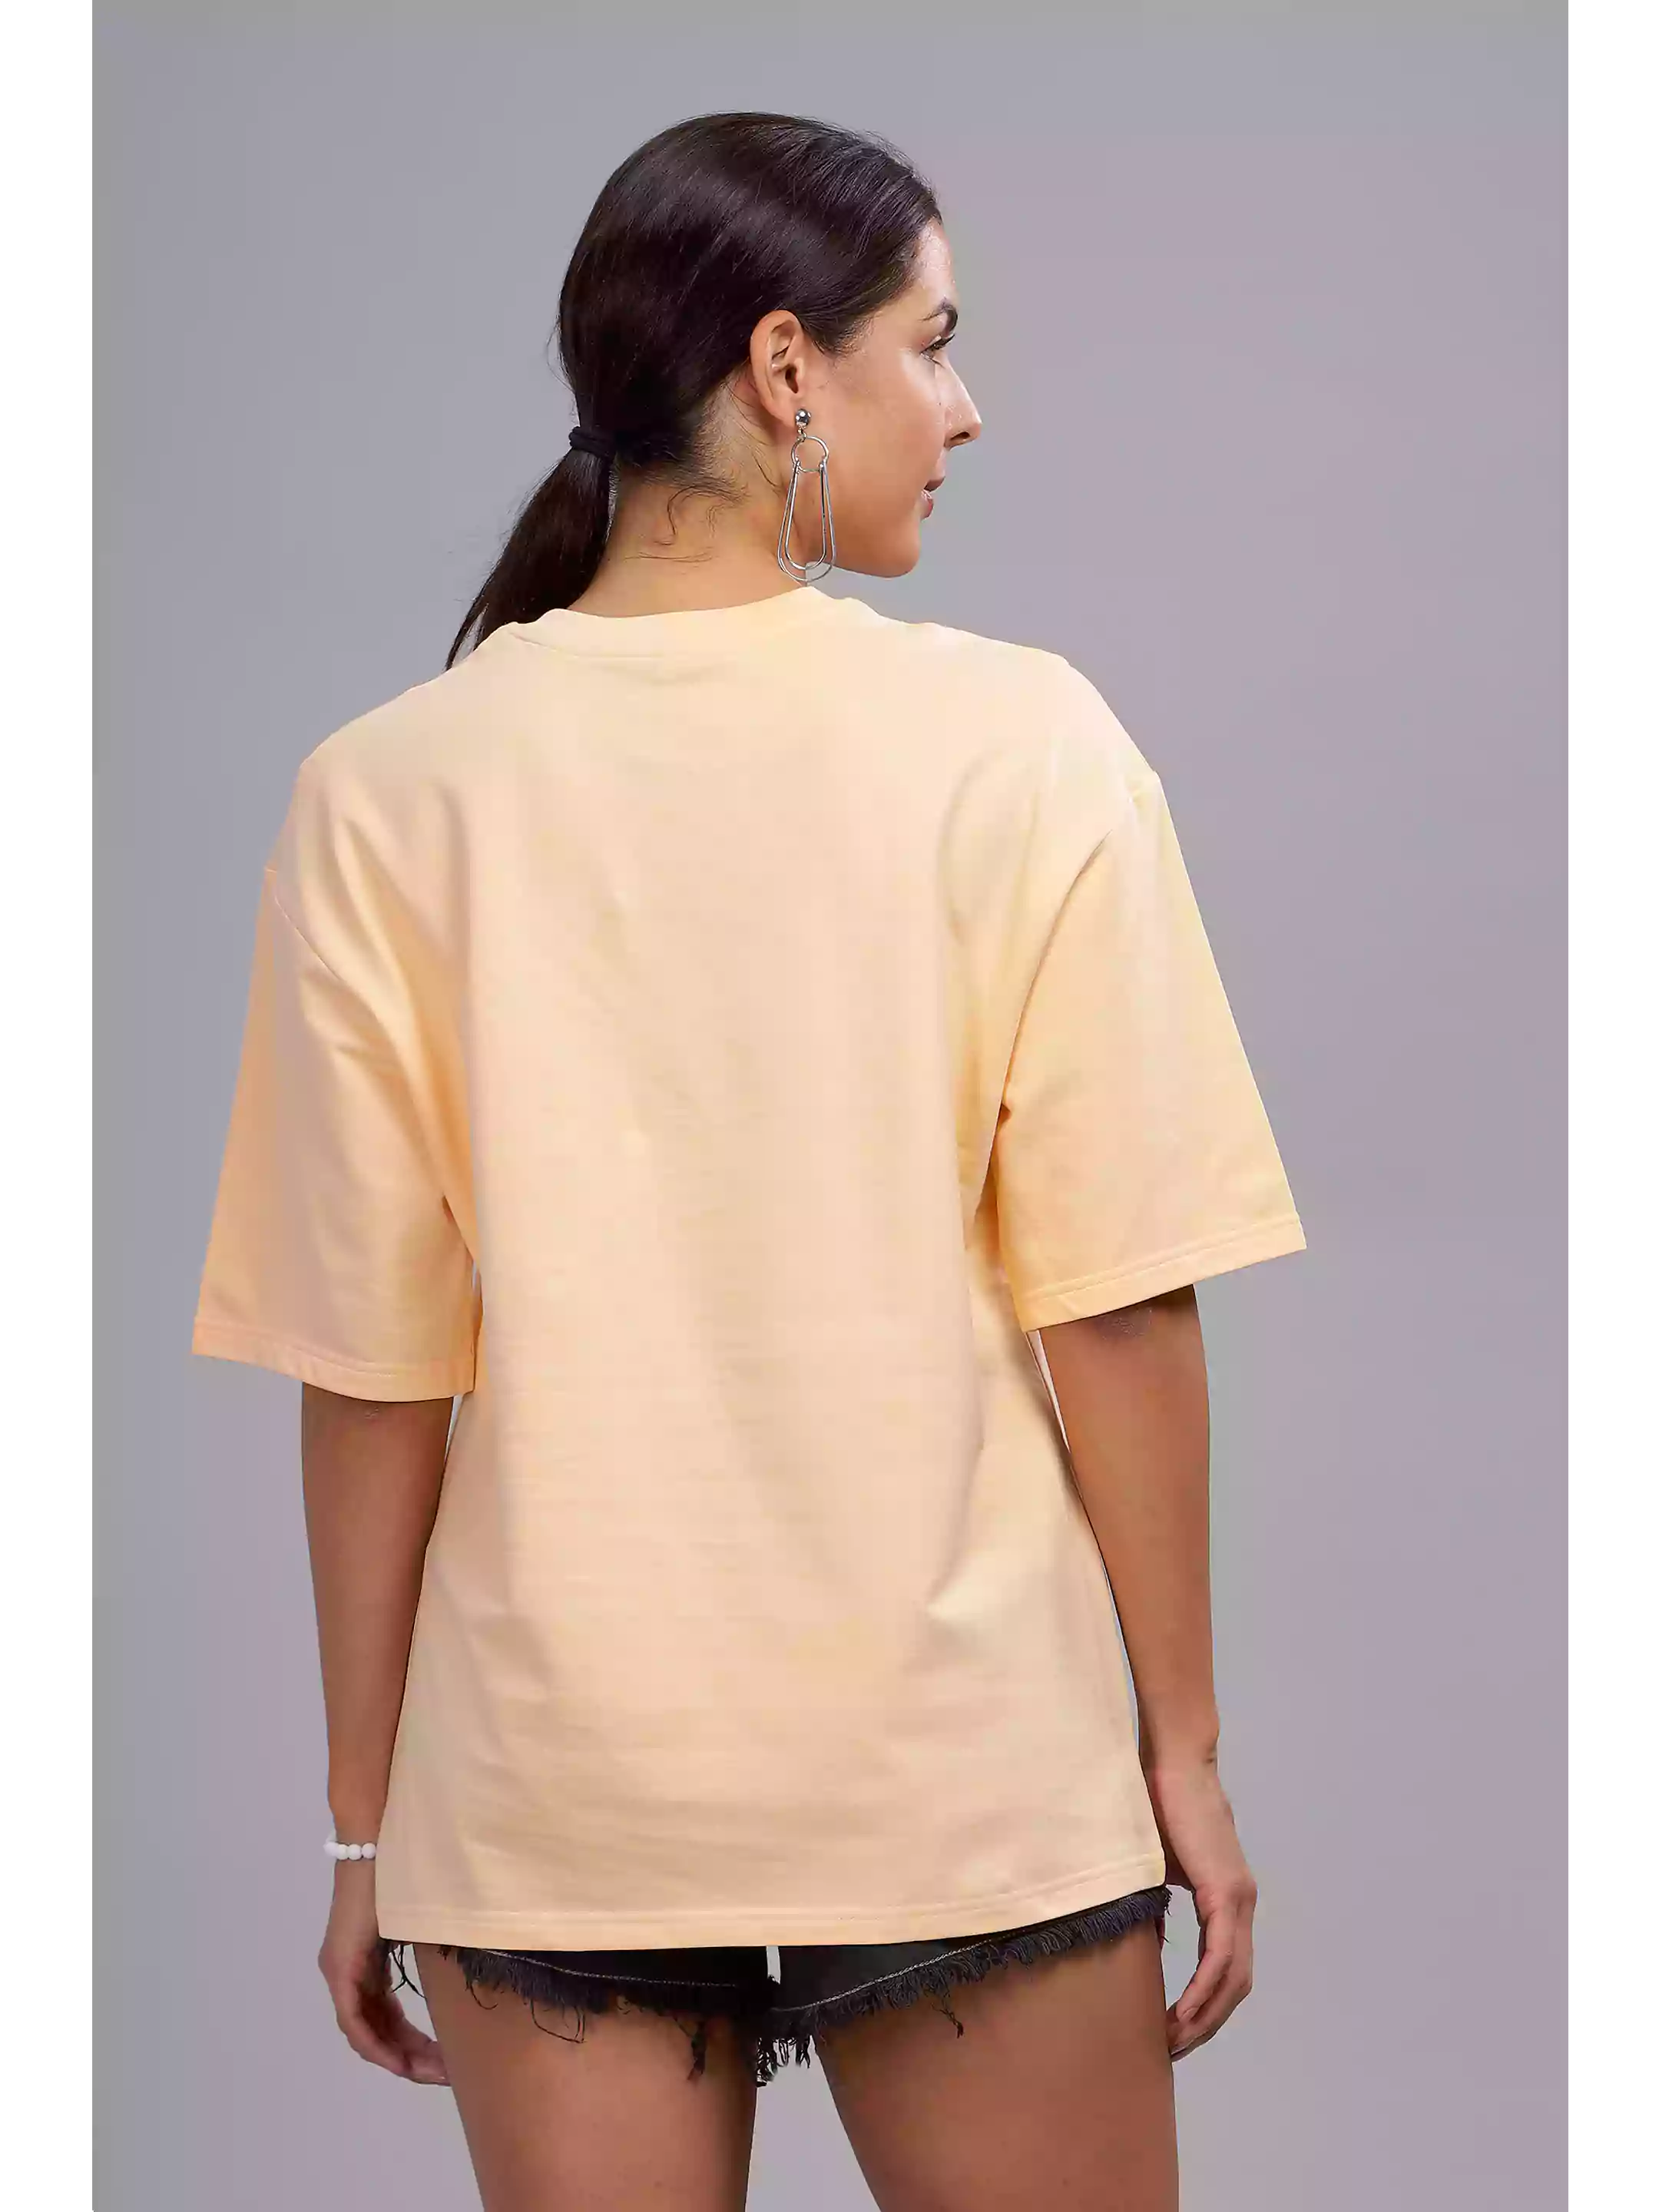 Solid Peach Over sized - Sukhiaatma Unisex T-shirt